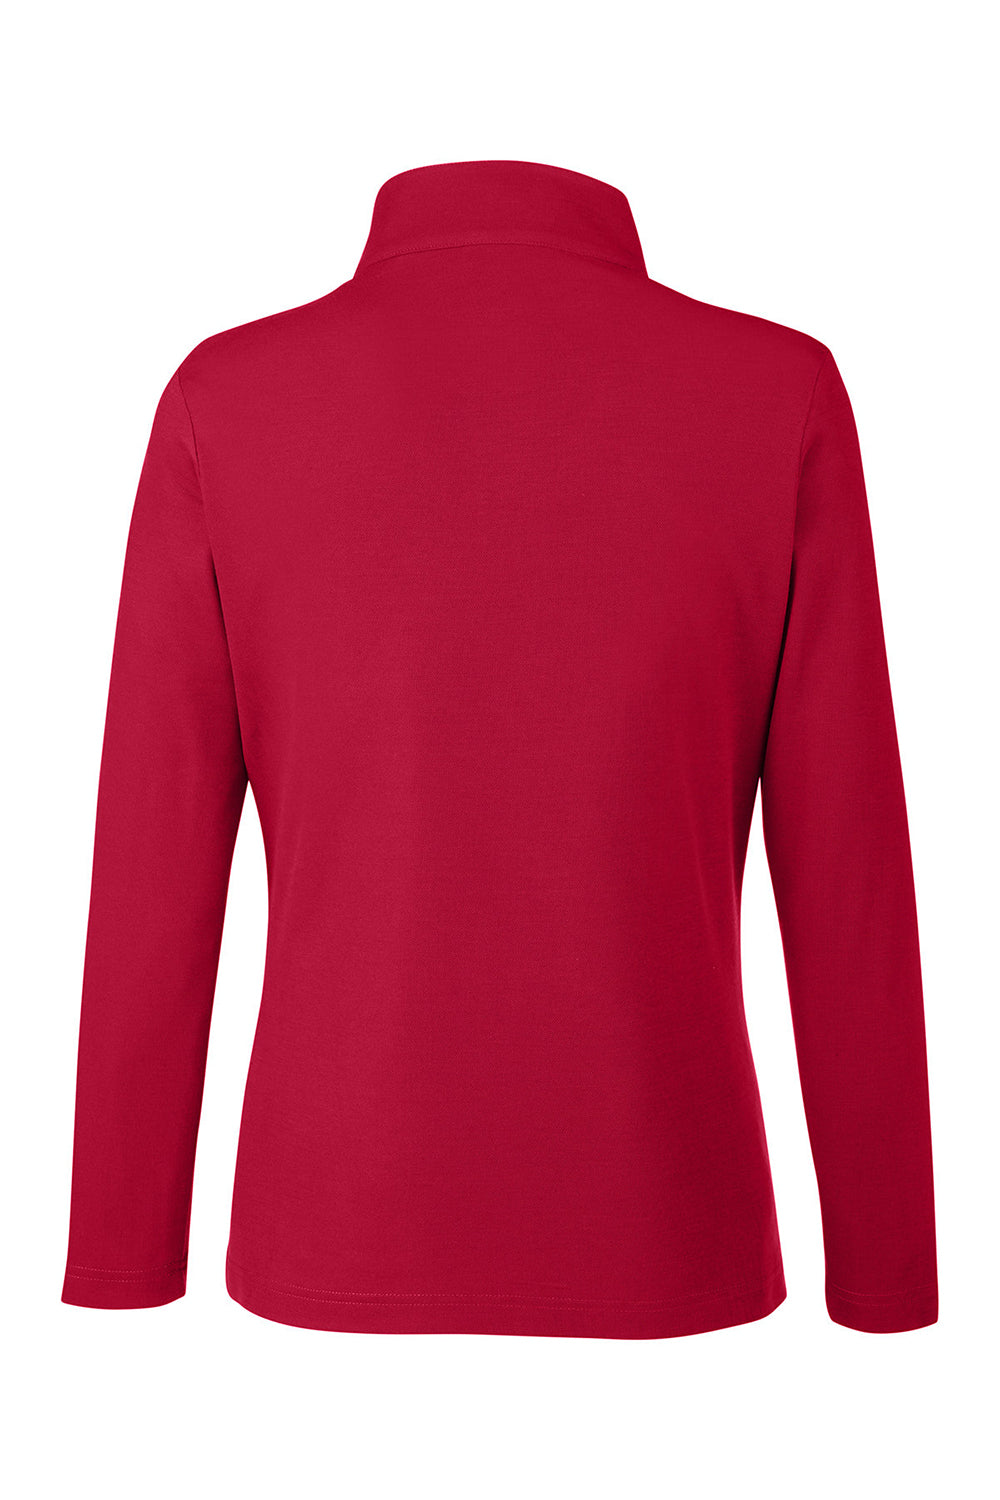 Core 365 CE405W Womens Fusion ChromaSoft Performance Moisture Wicking Pique 1/4 Zip Sweatshirt Classic Red Flat Back